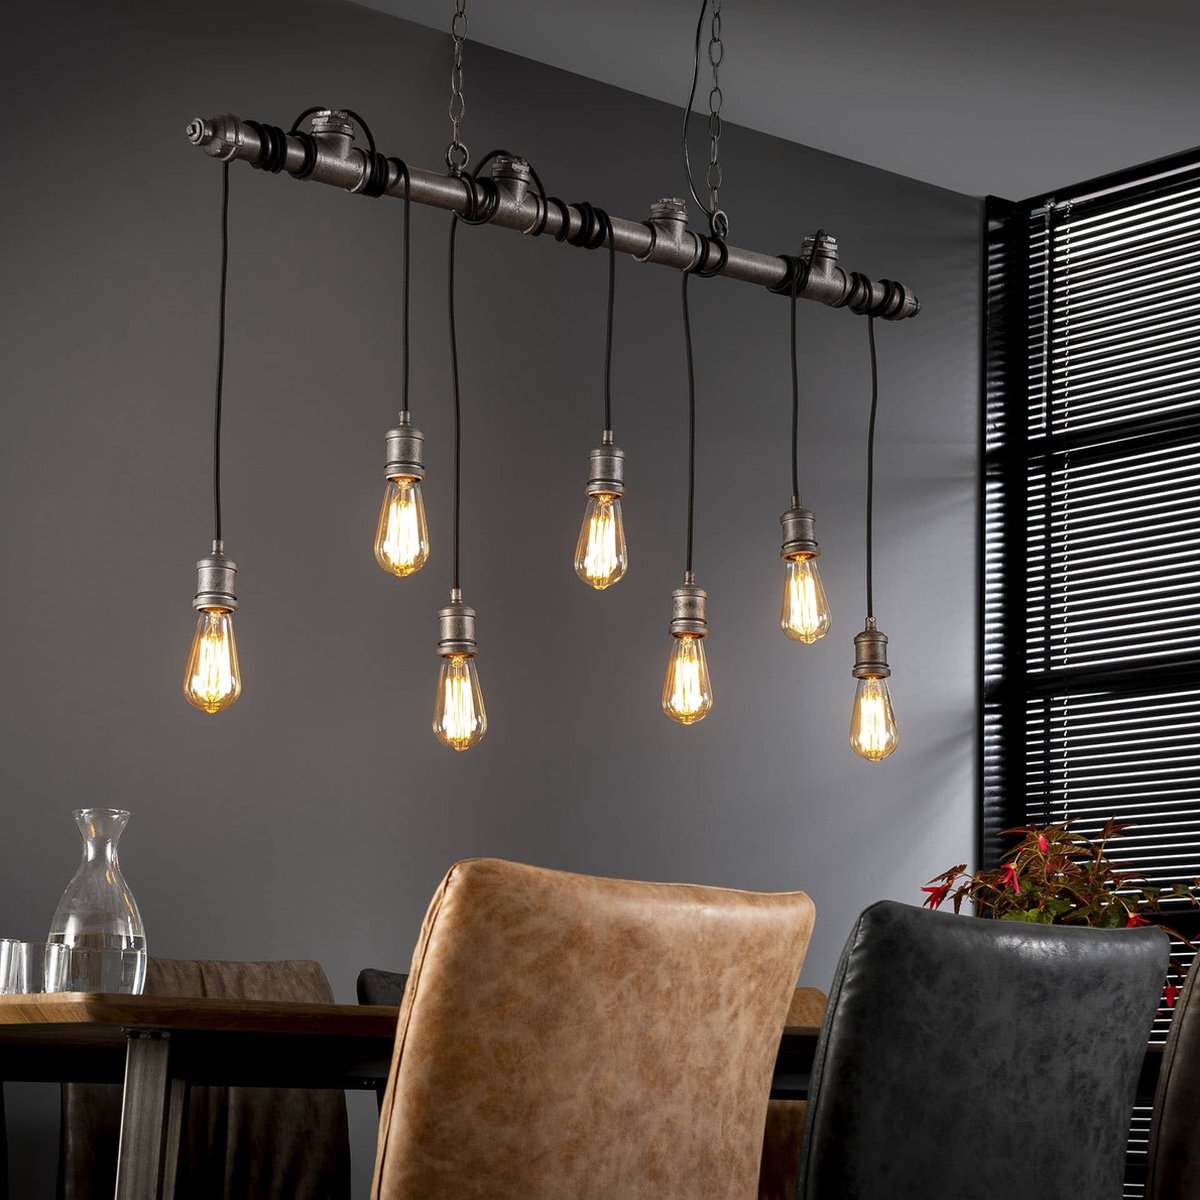 Hanglamp industrial tube wikkel | 7 lichts | oud zilver | metaal | in hoogte verstelbaar tot 150 cm | eetkamer / eettafel lamp | modern / sfeervol design